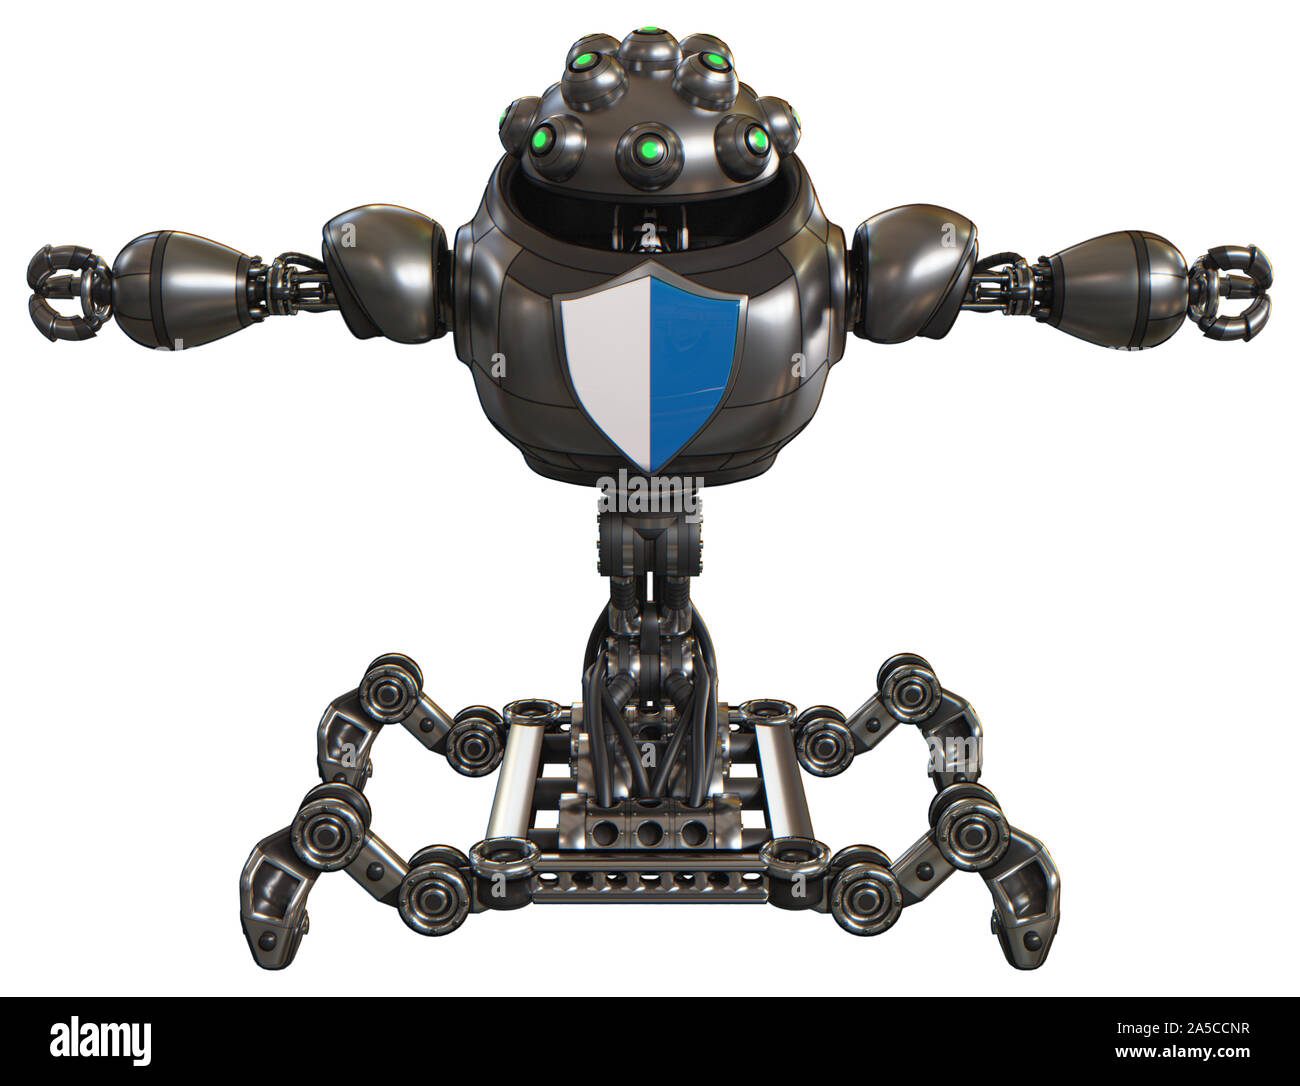 A Dash robot Stock Photo - Alamy